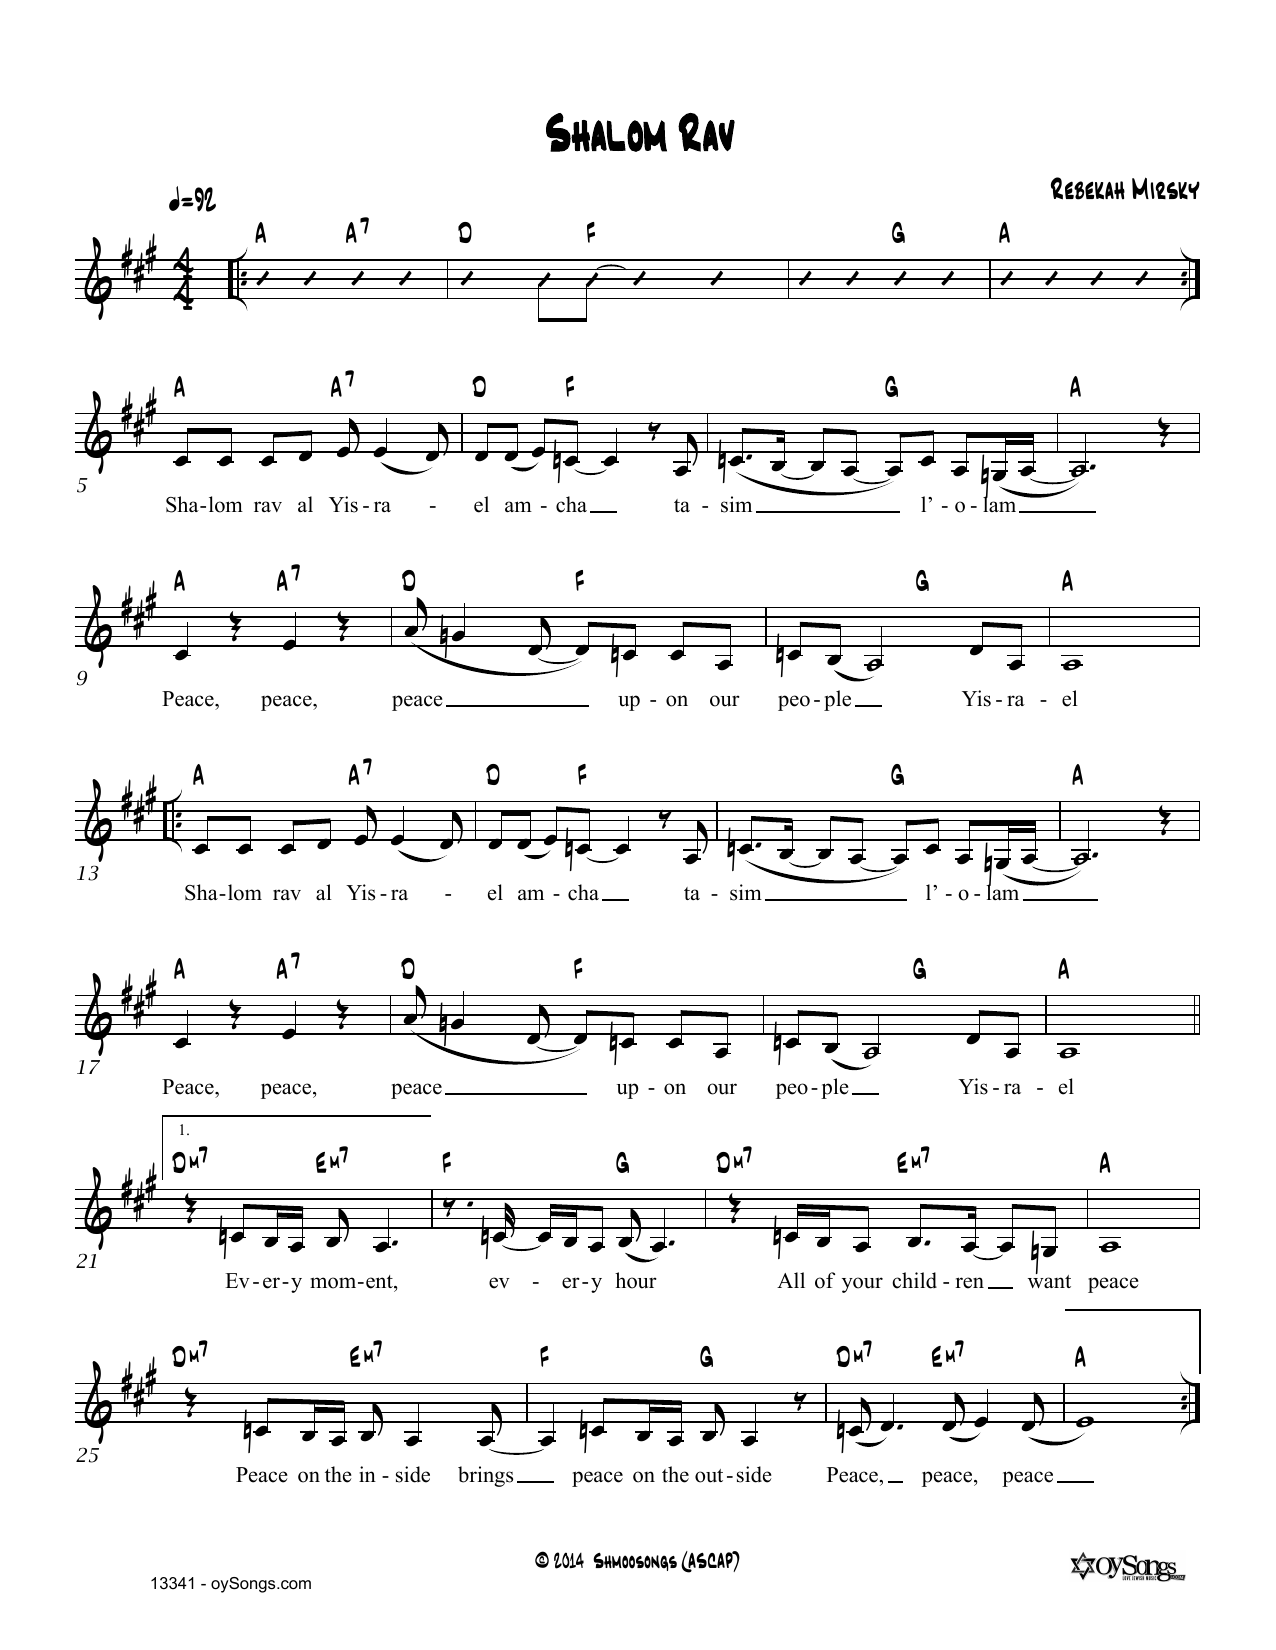 Rebecca Mirsky Shalom Rav Sheet Music Notes & Chords for Real Book – Melody, Lyrics & Chords - Download or Print PDF